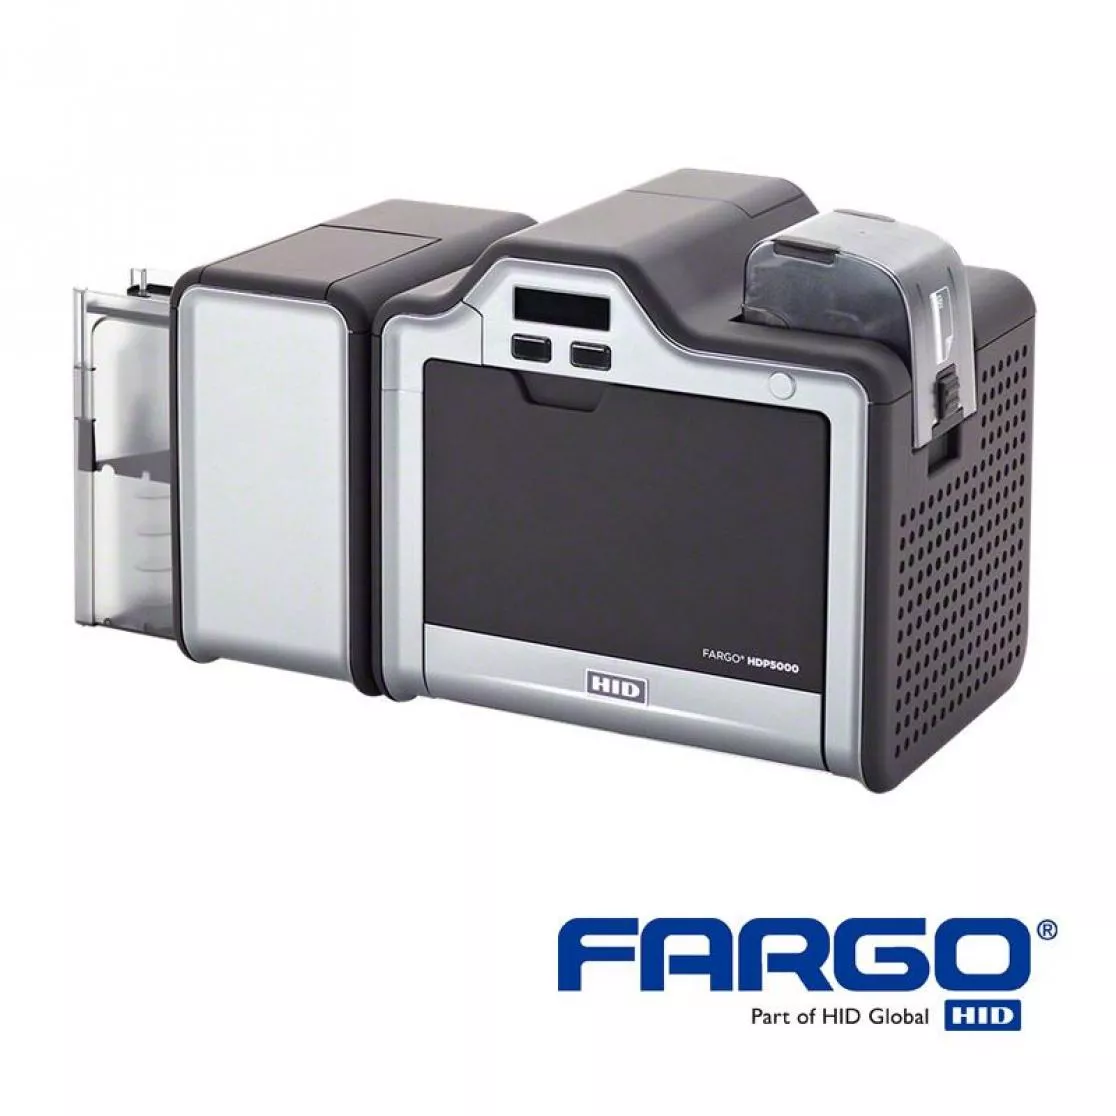 HID Fargo hdp5000 with flipper module